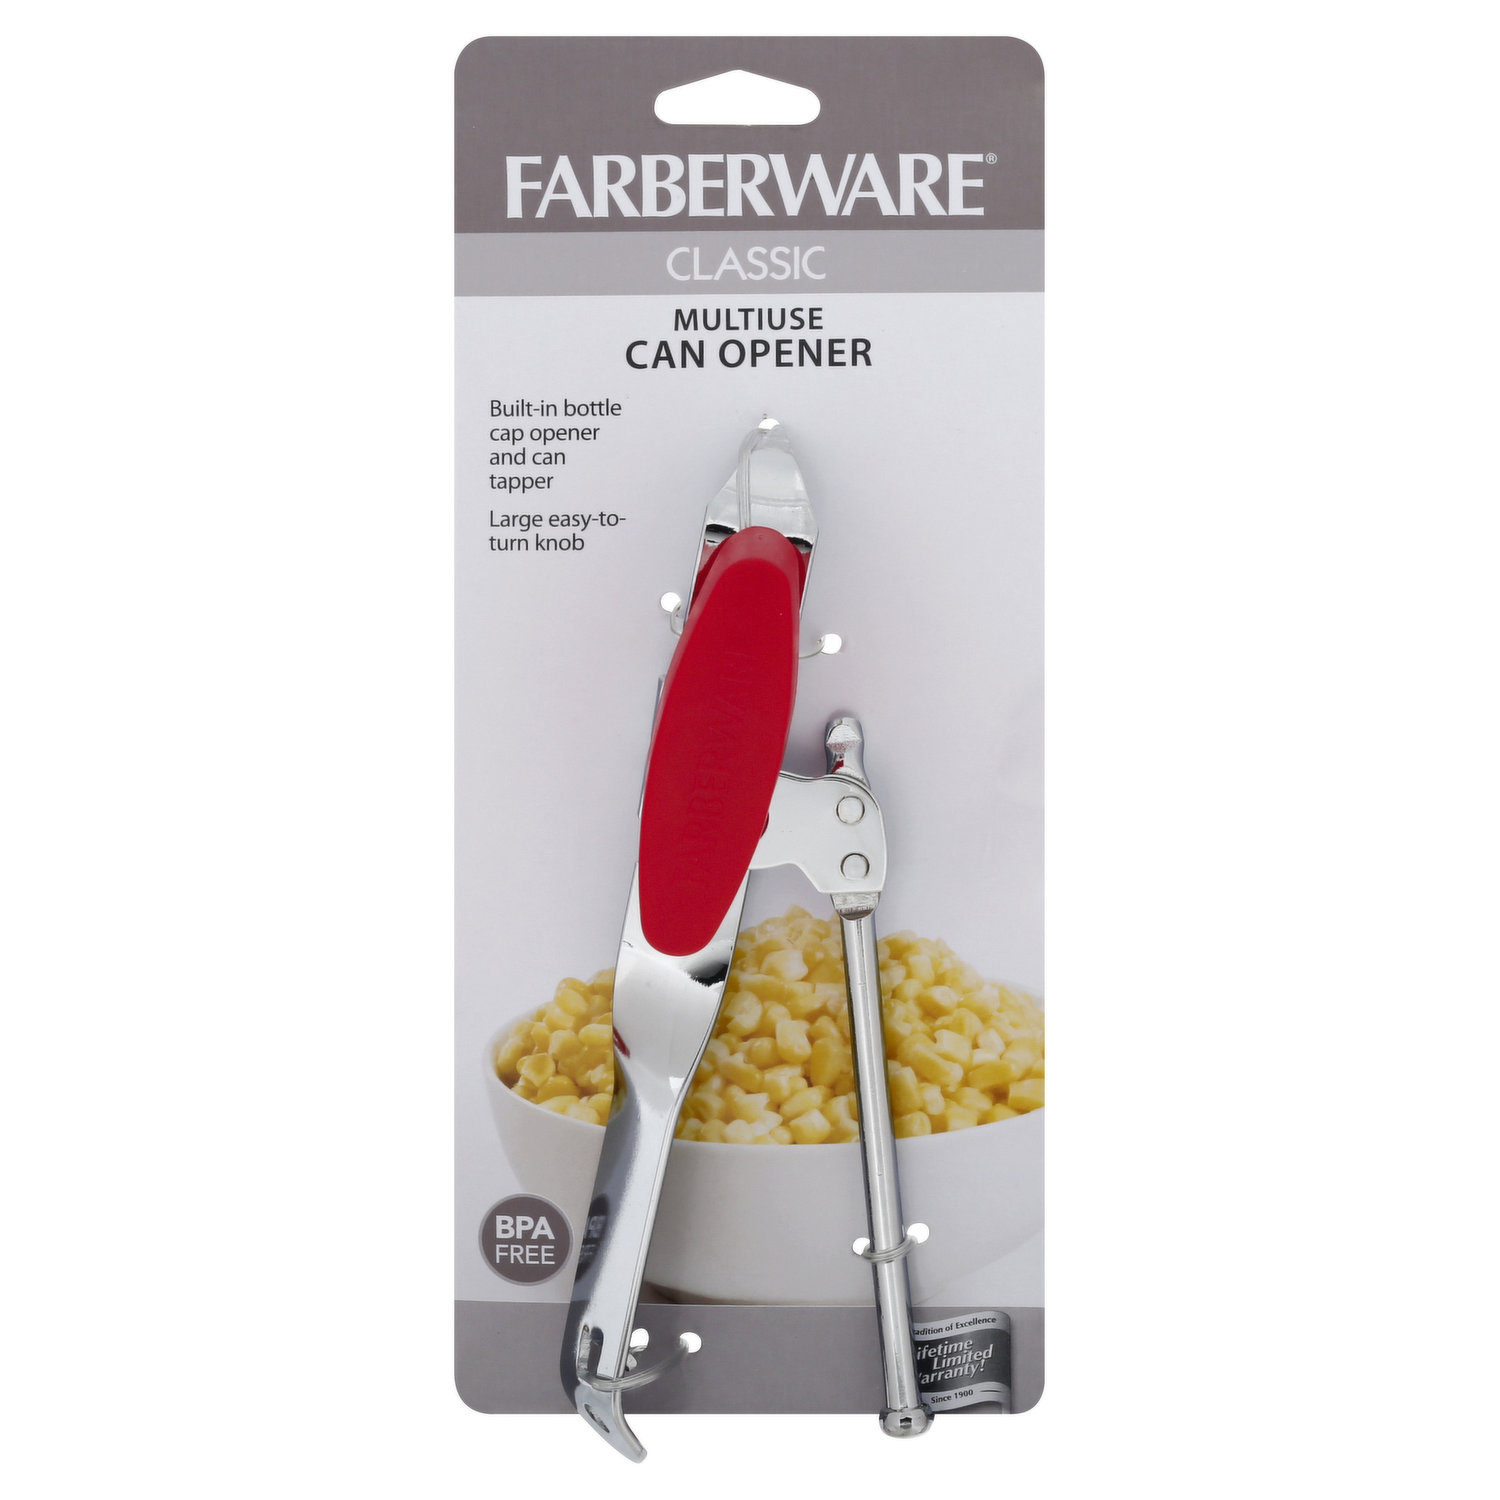 Farberware - Teal Can & Bottle Opener Set